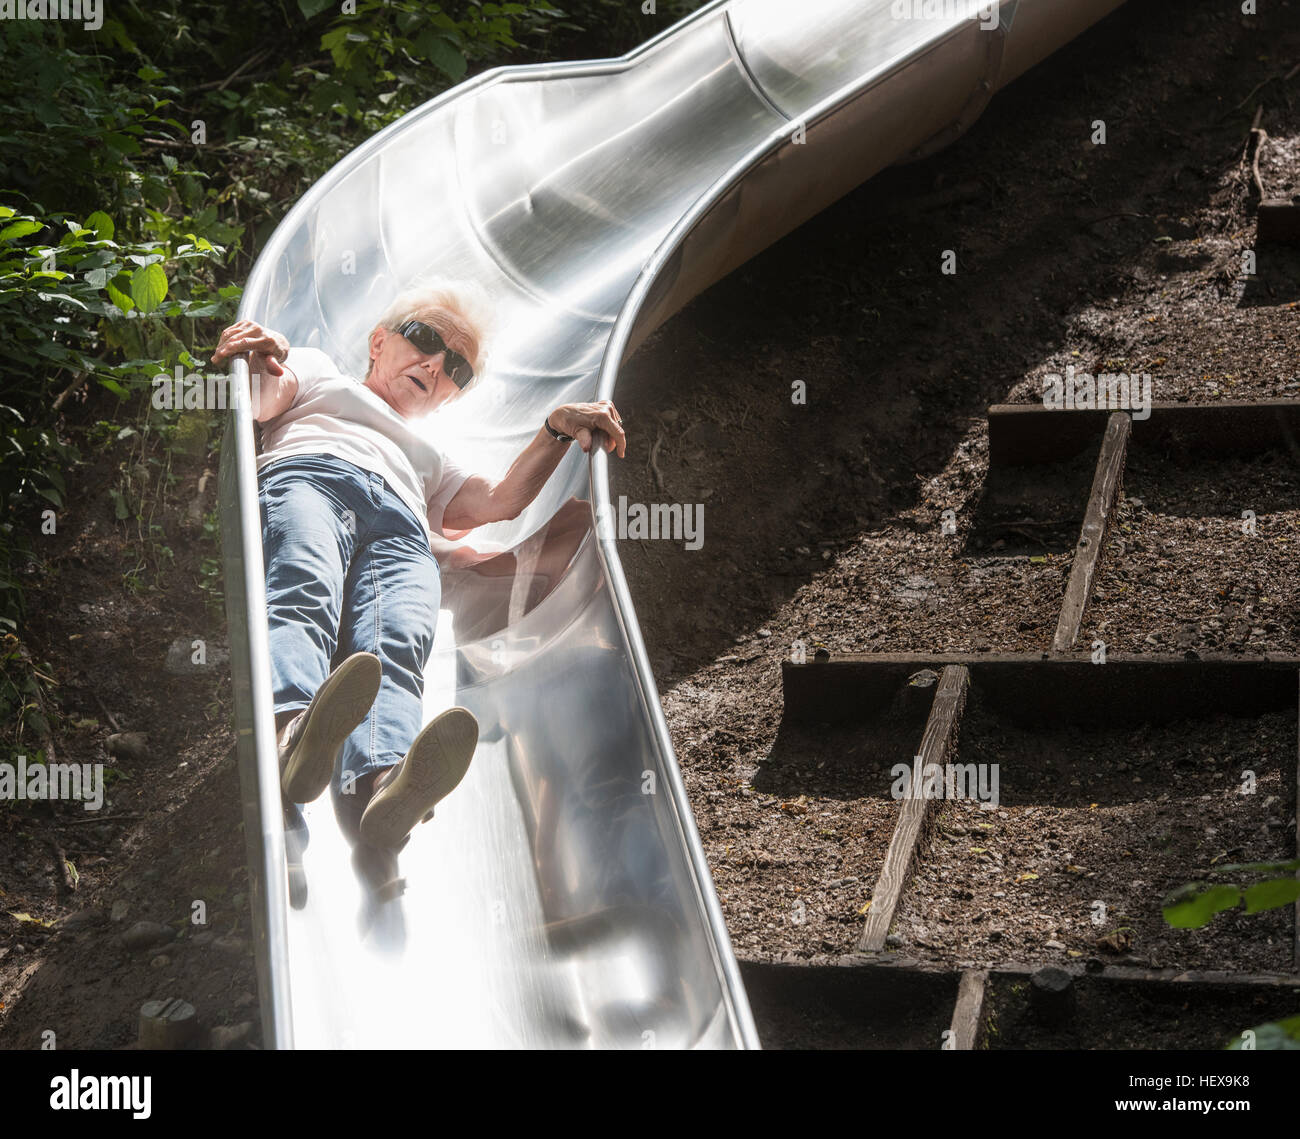 Woman sliding down playground slide Stock Photo